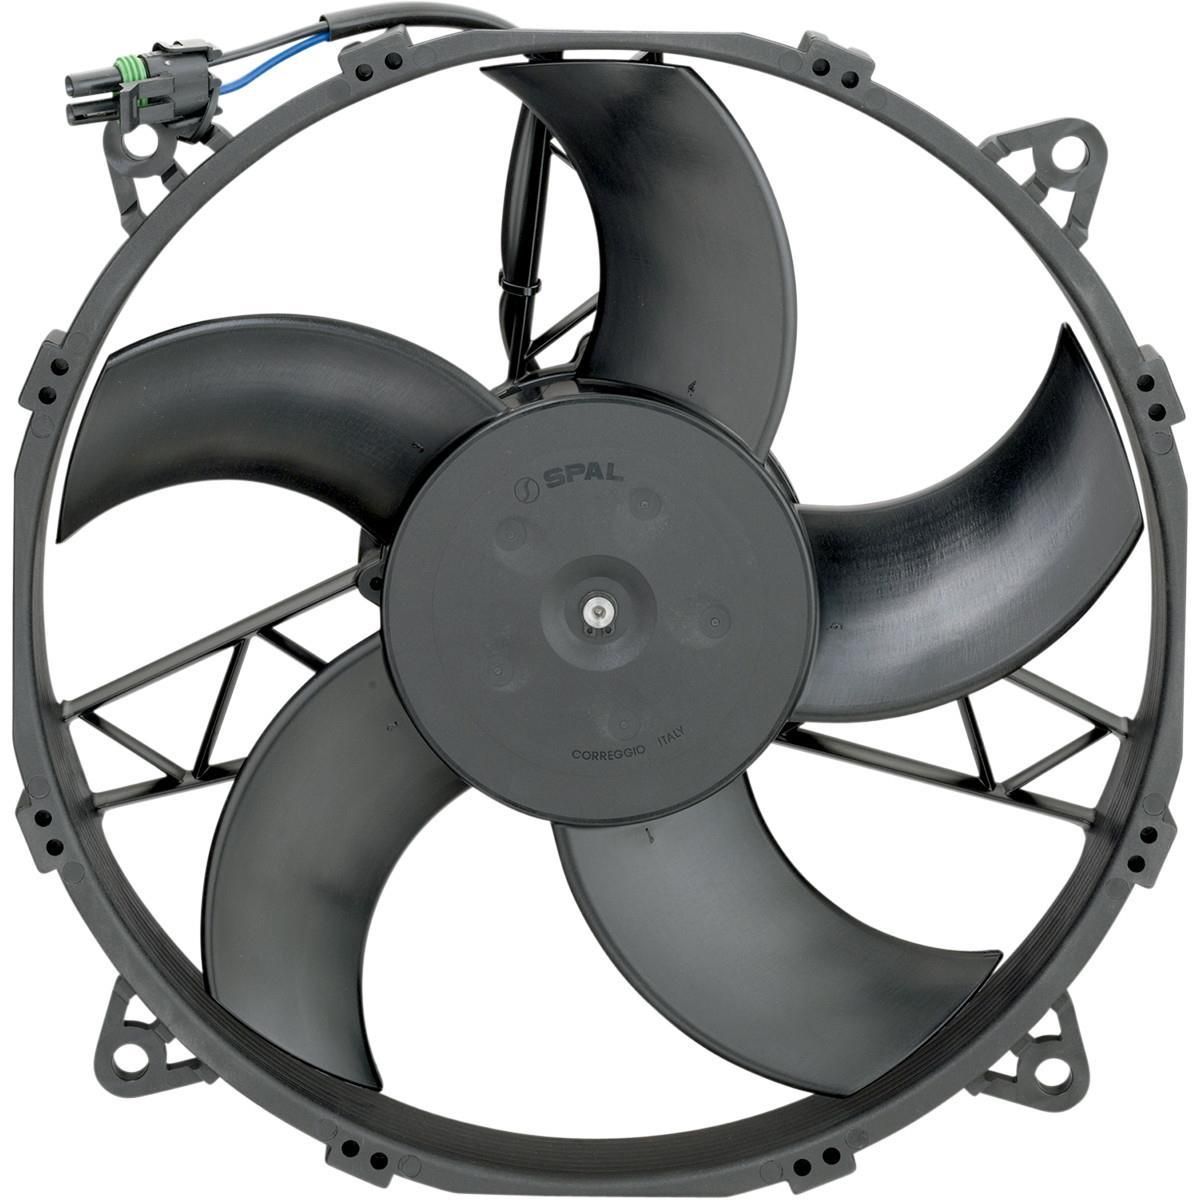 224K-MOOSE-UTILI-19010323 Hi-Performance Cooling Fan